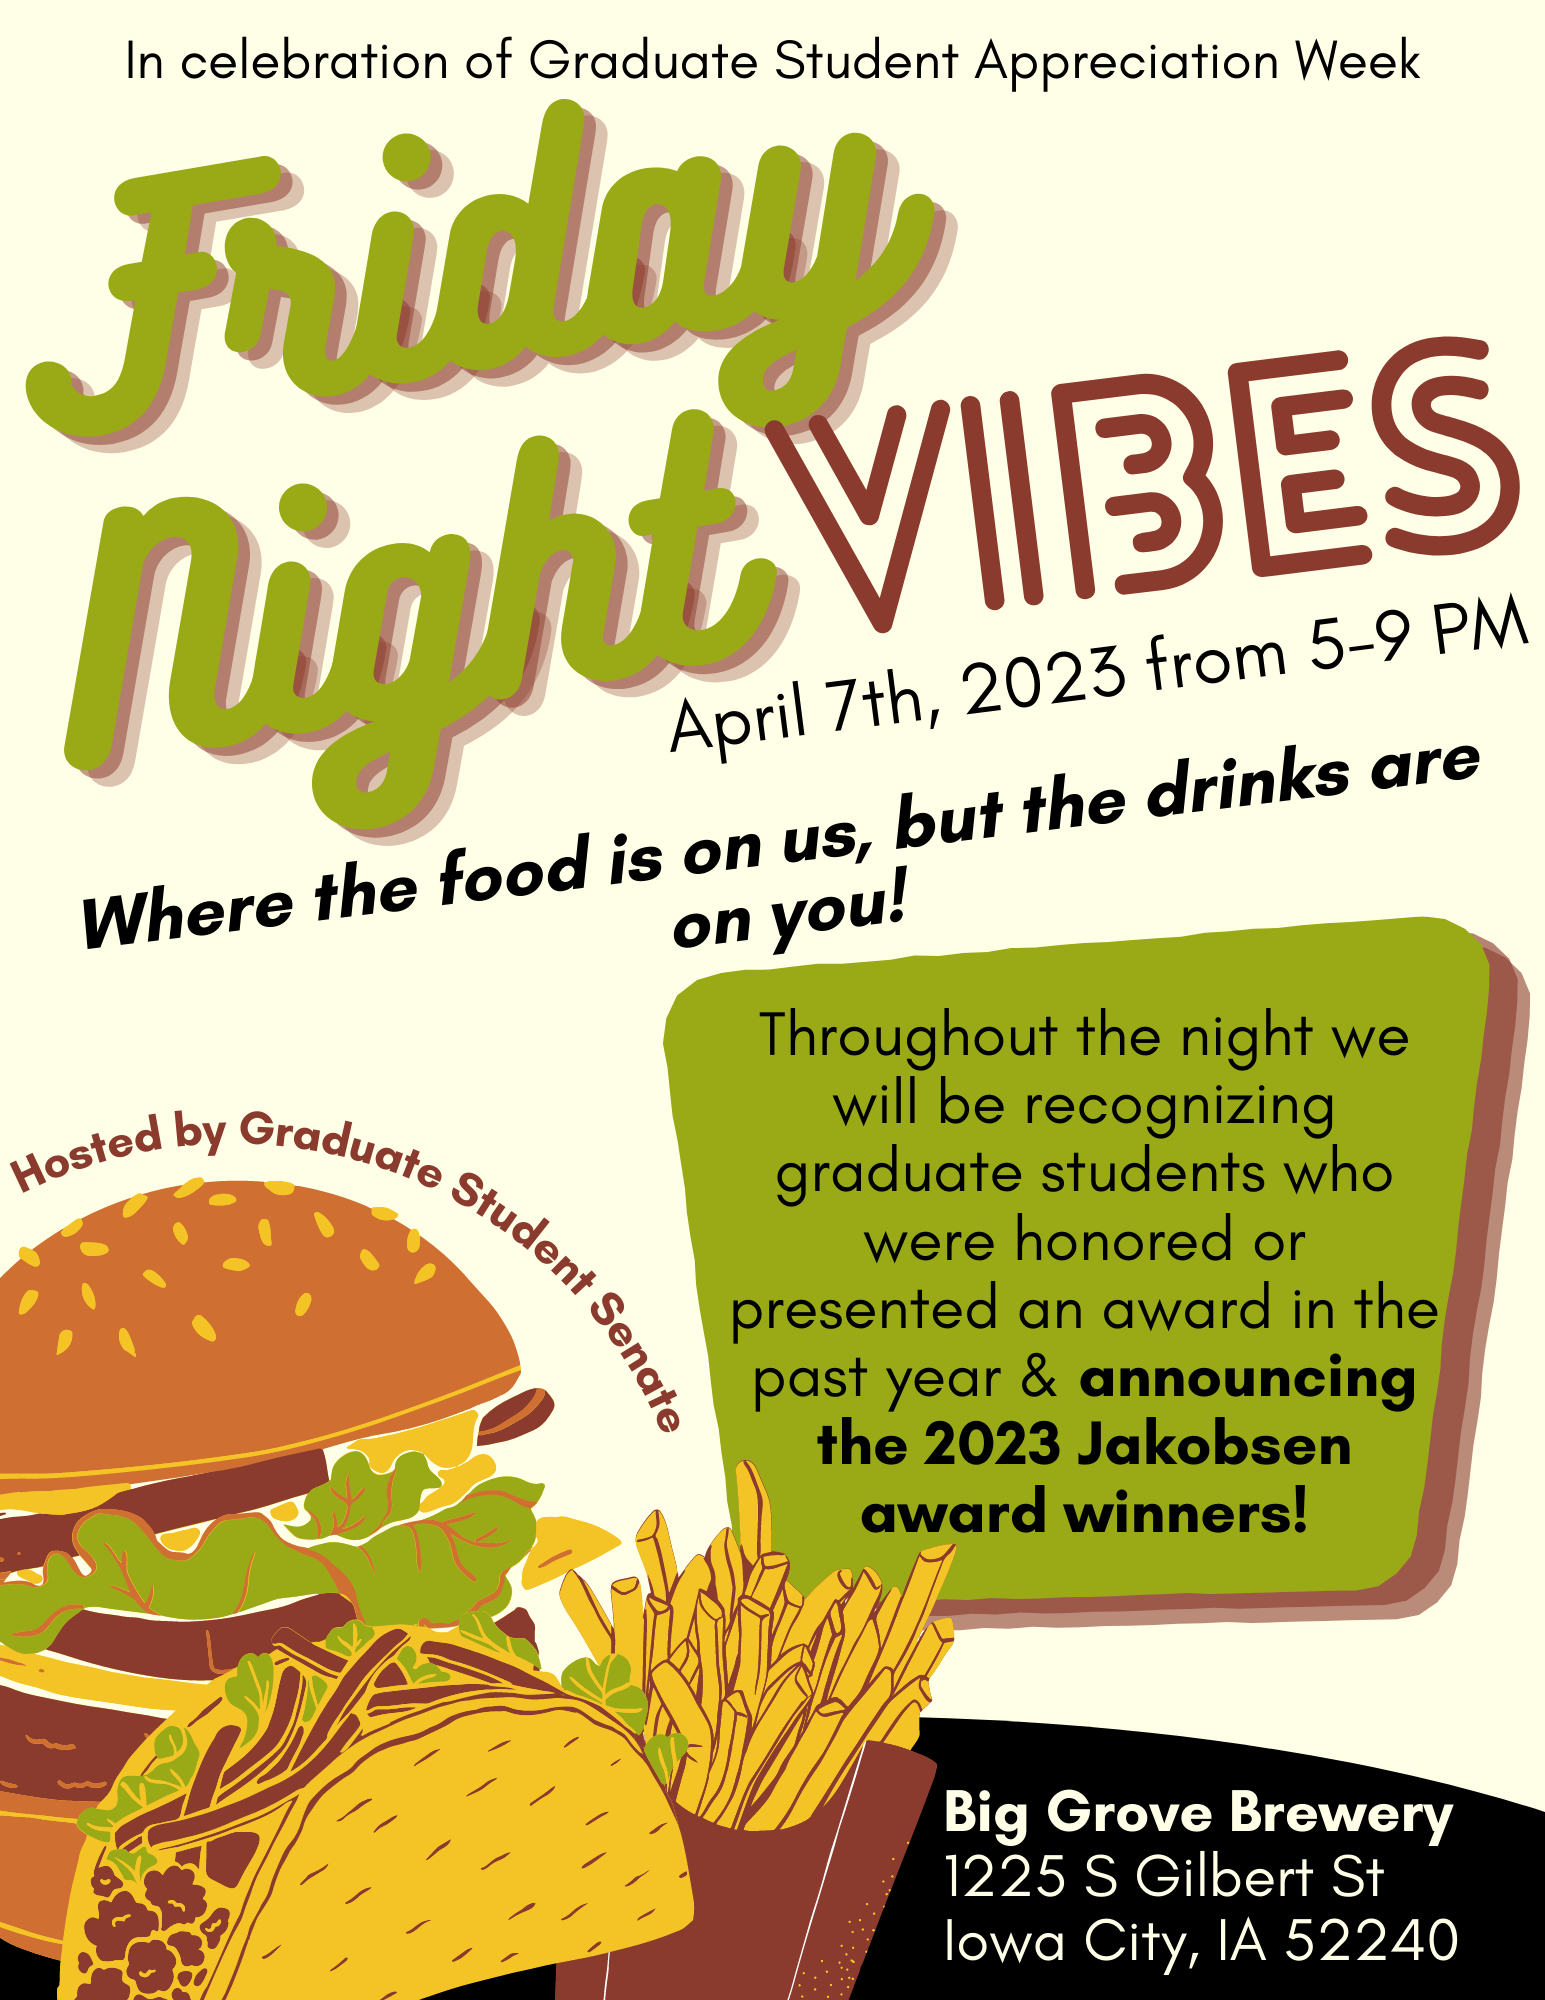 Friday Night Vibes promotional image